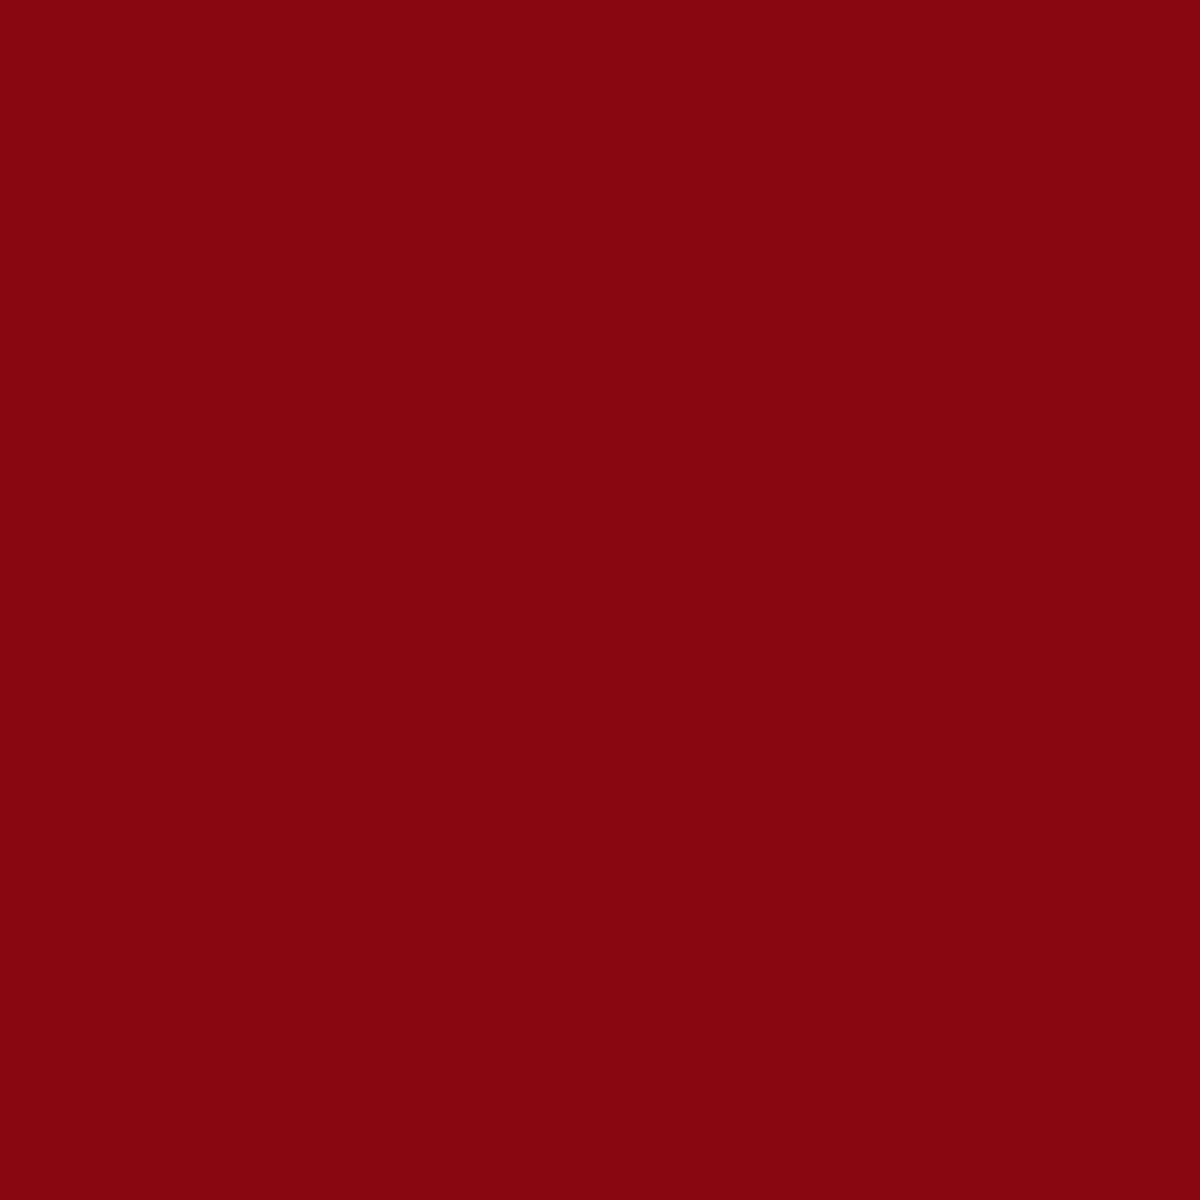 3M Film couleur translucide 3630-53 rouge tomate 1,22m x 45,7m